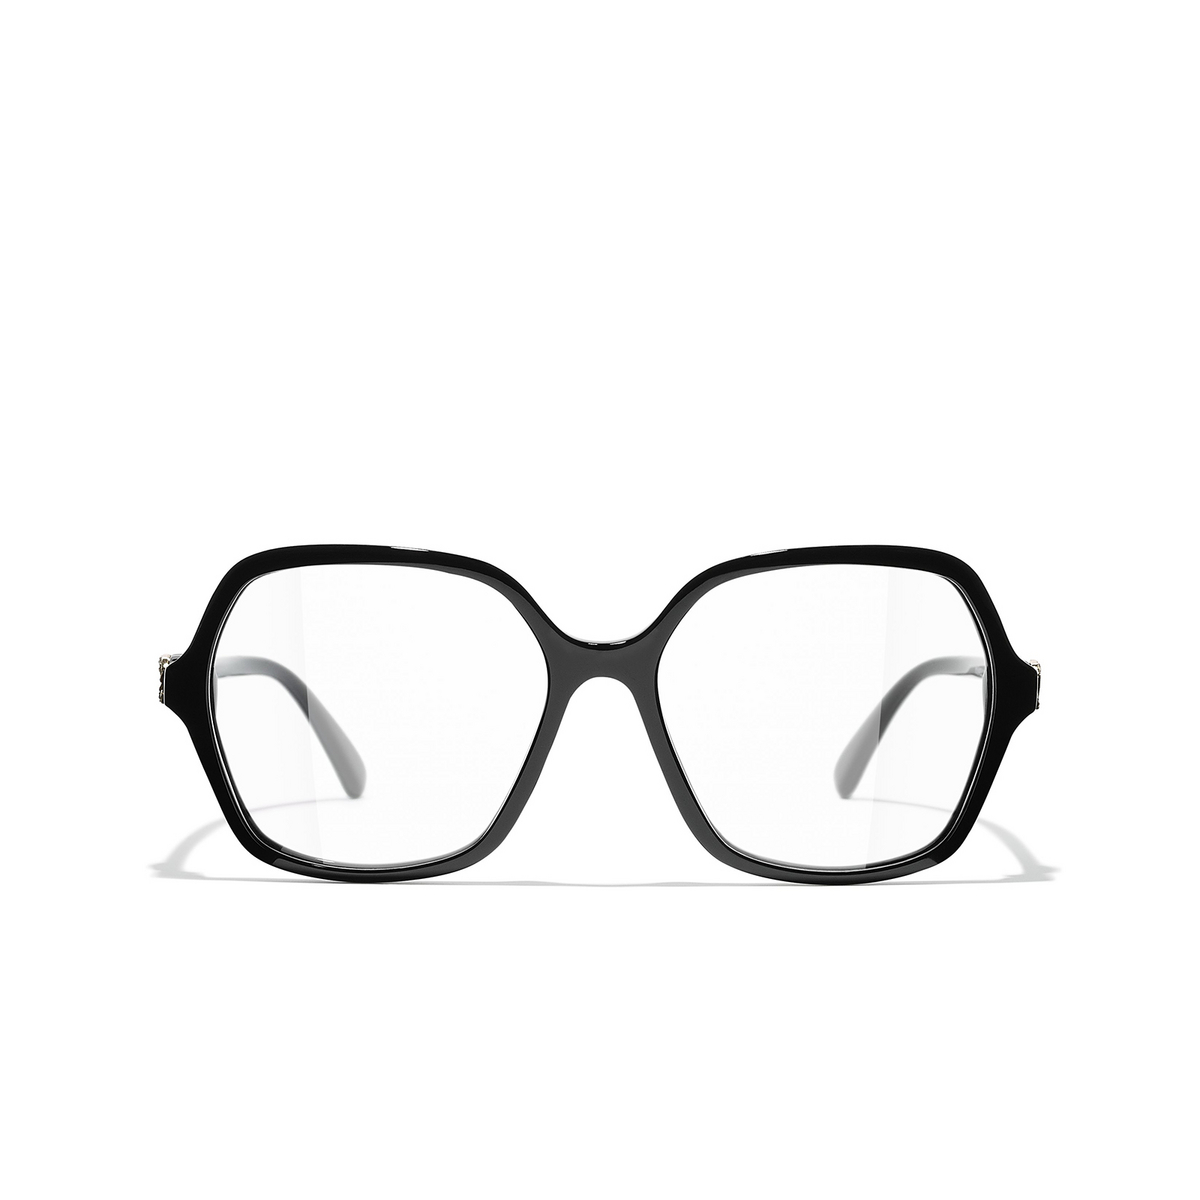 CHANEL square Eyeglasses C622 Black - front view